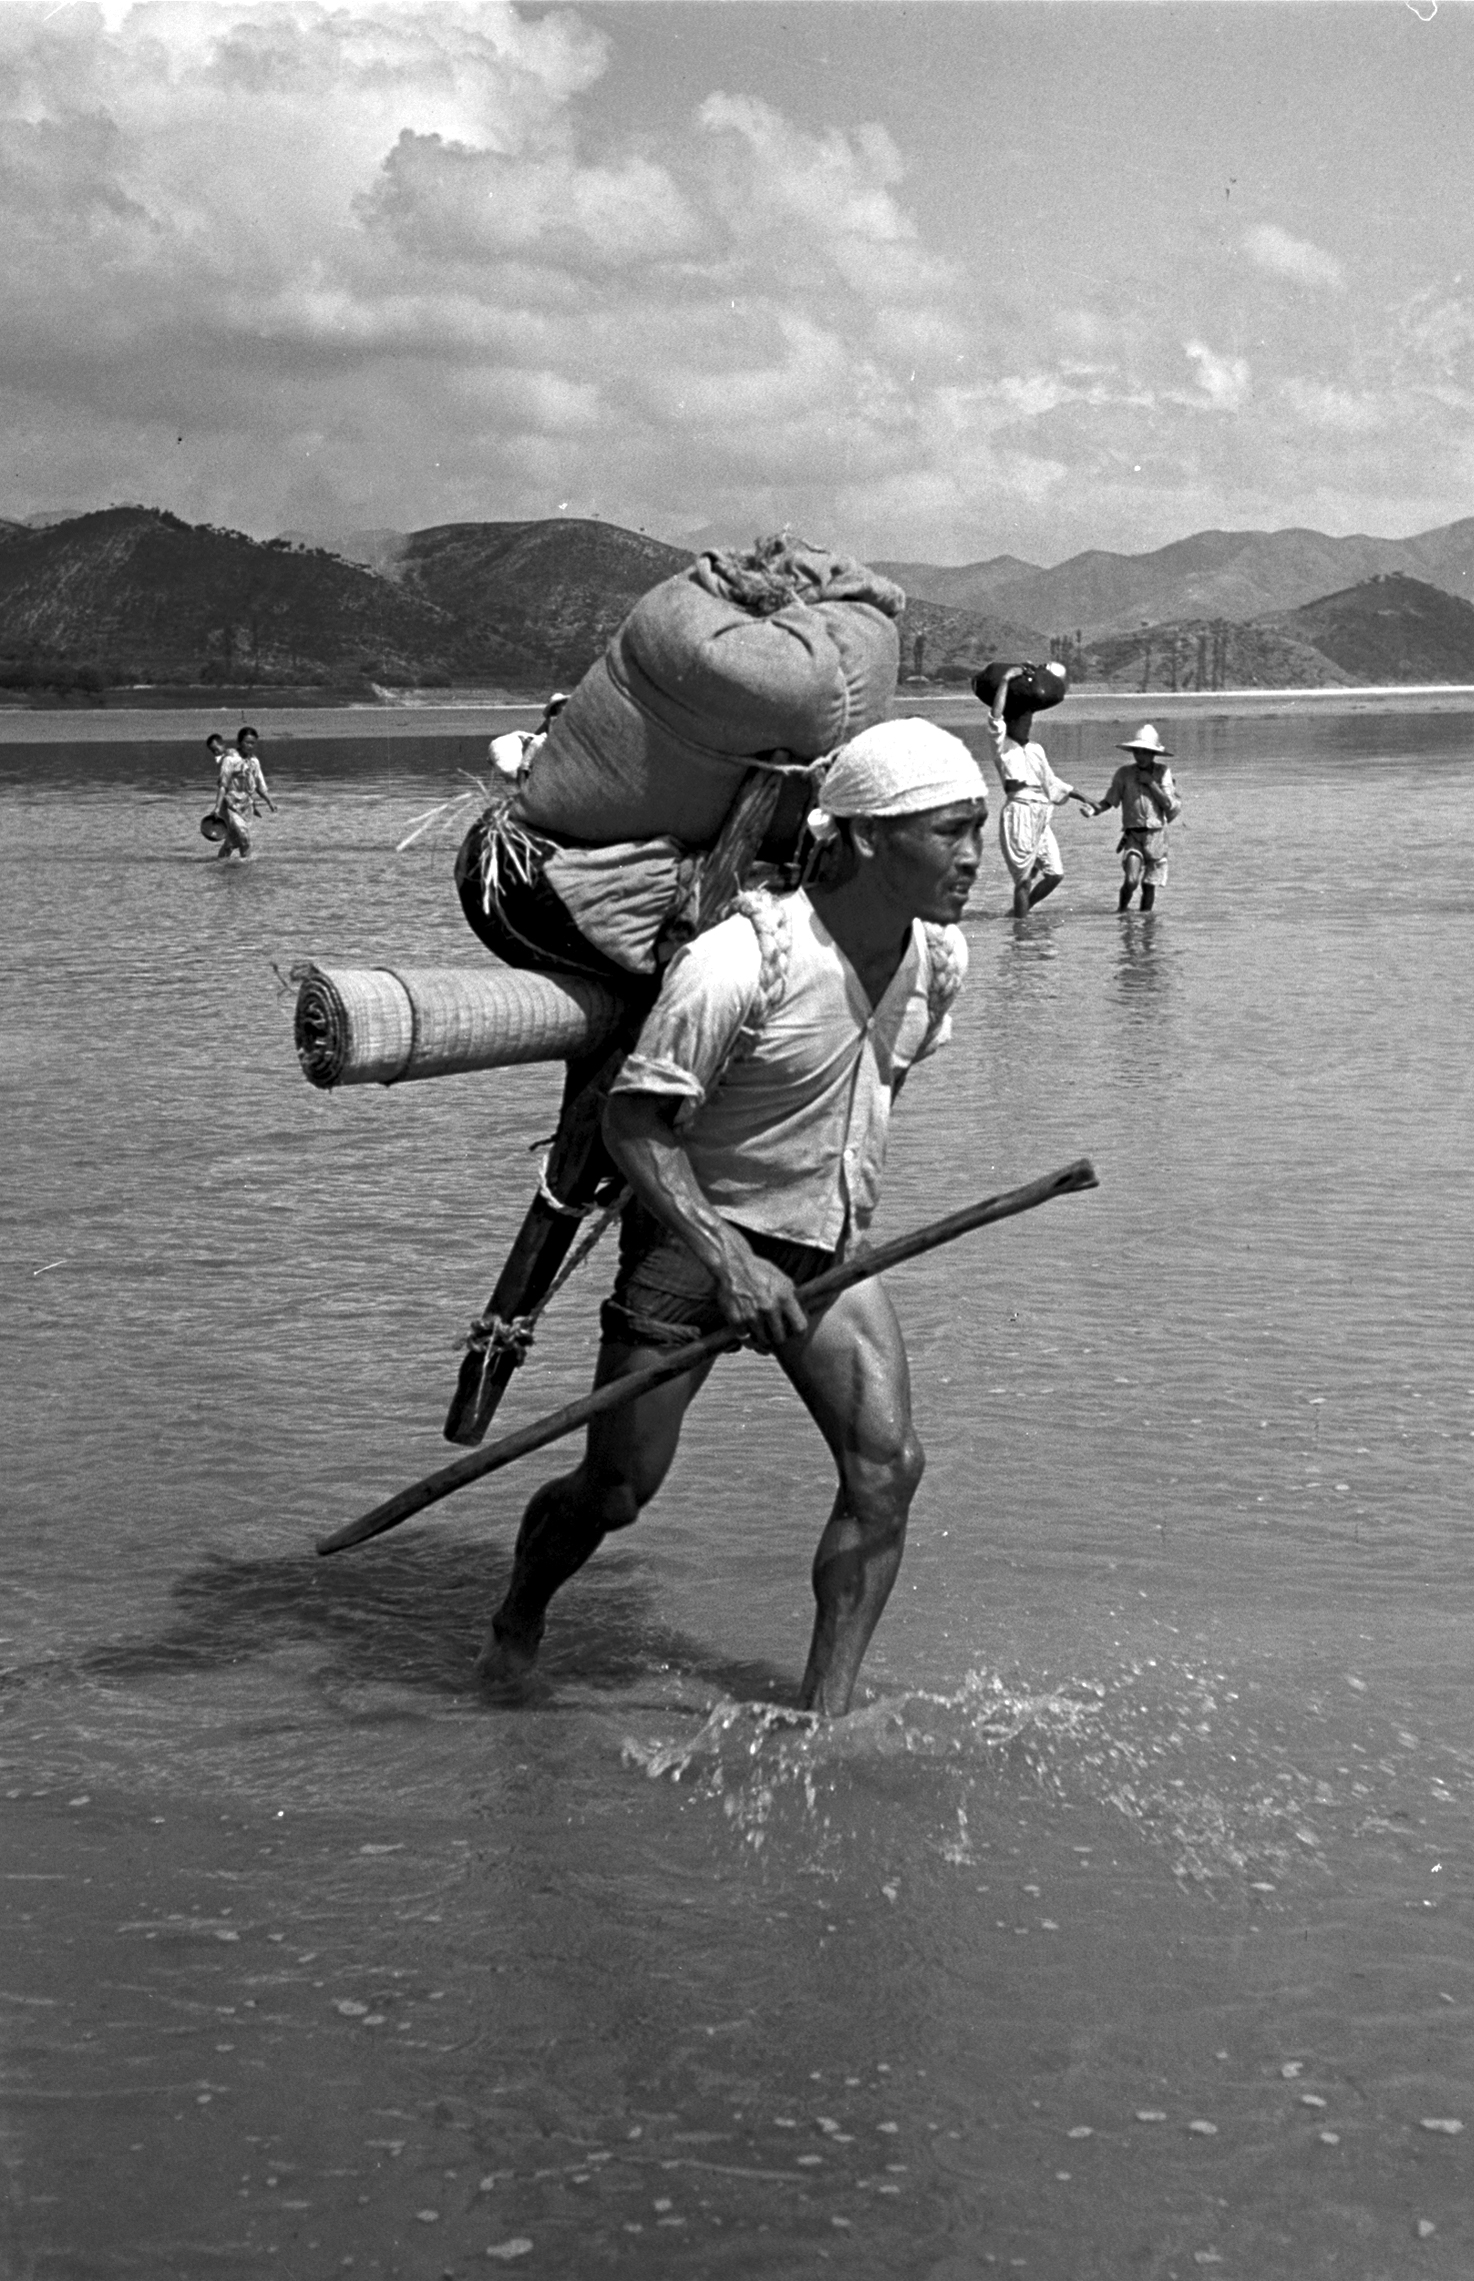 Korean refugees crossing the Naktong River during the Korean war, 1950.